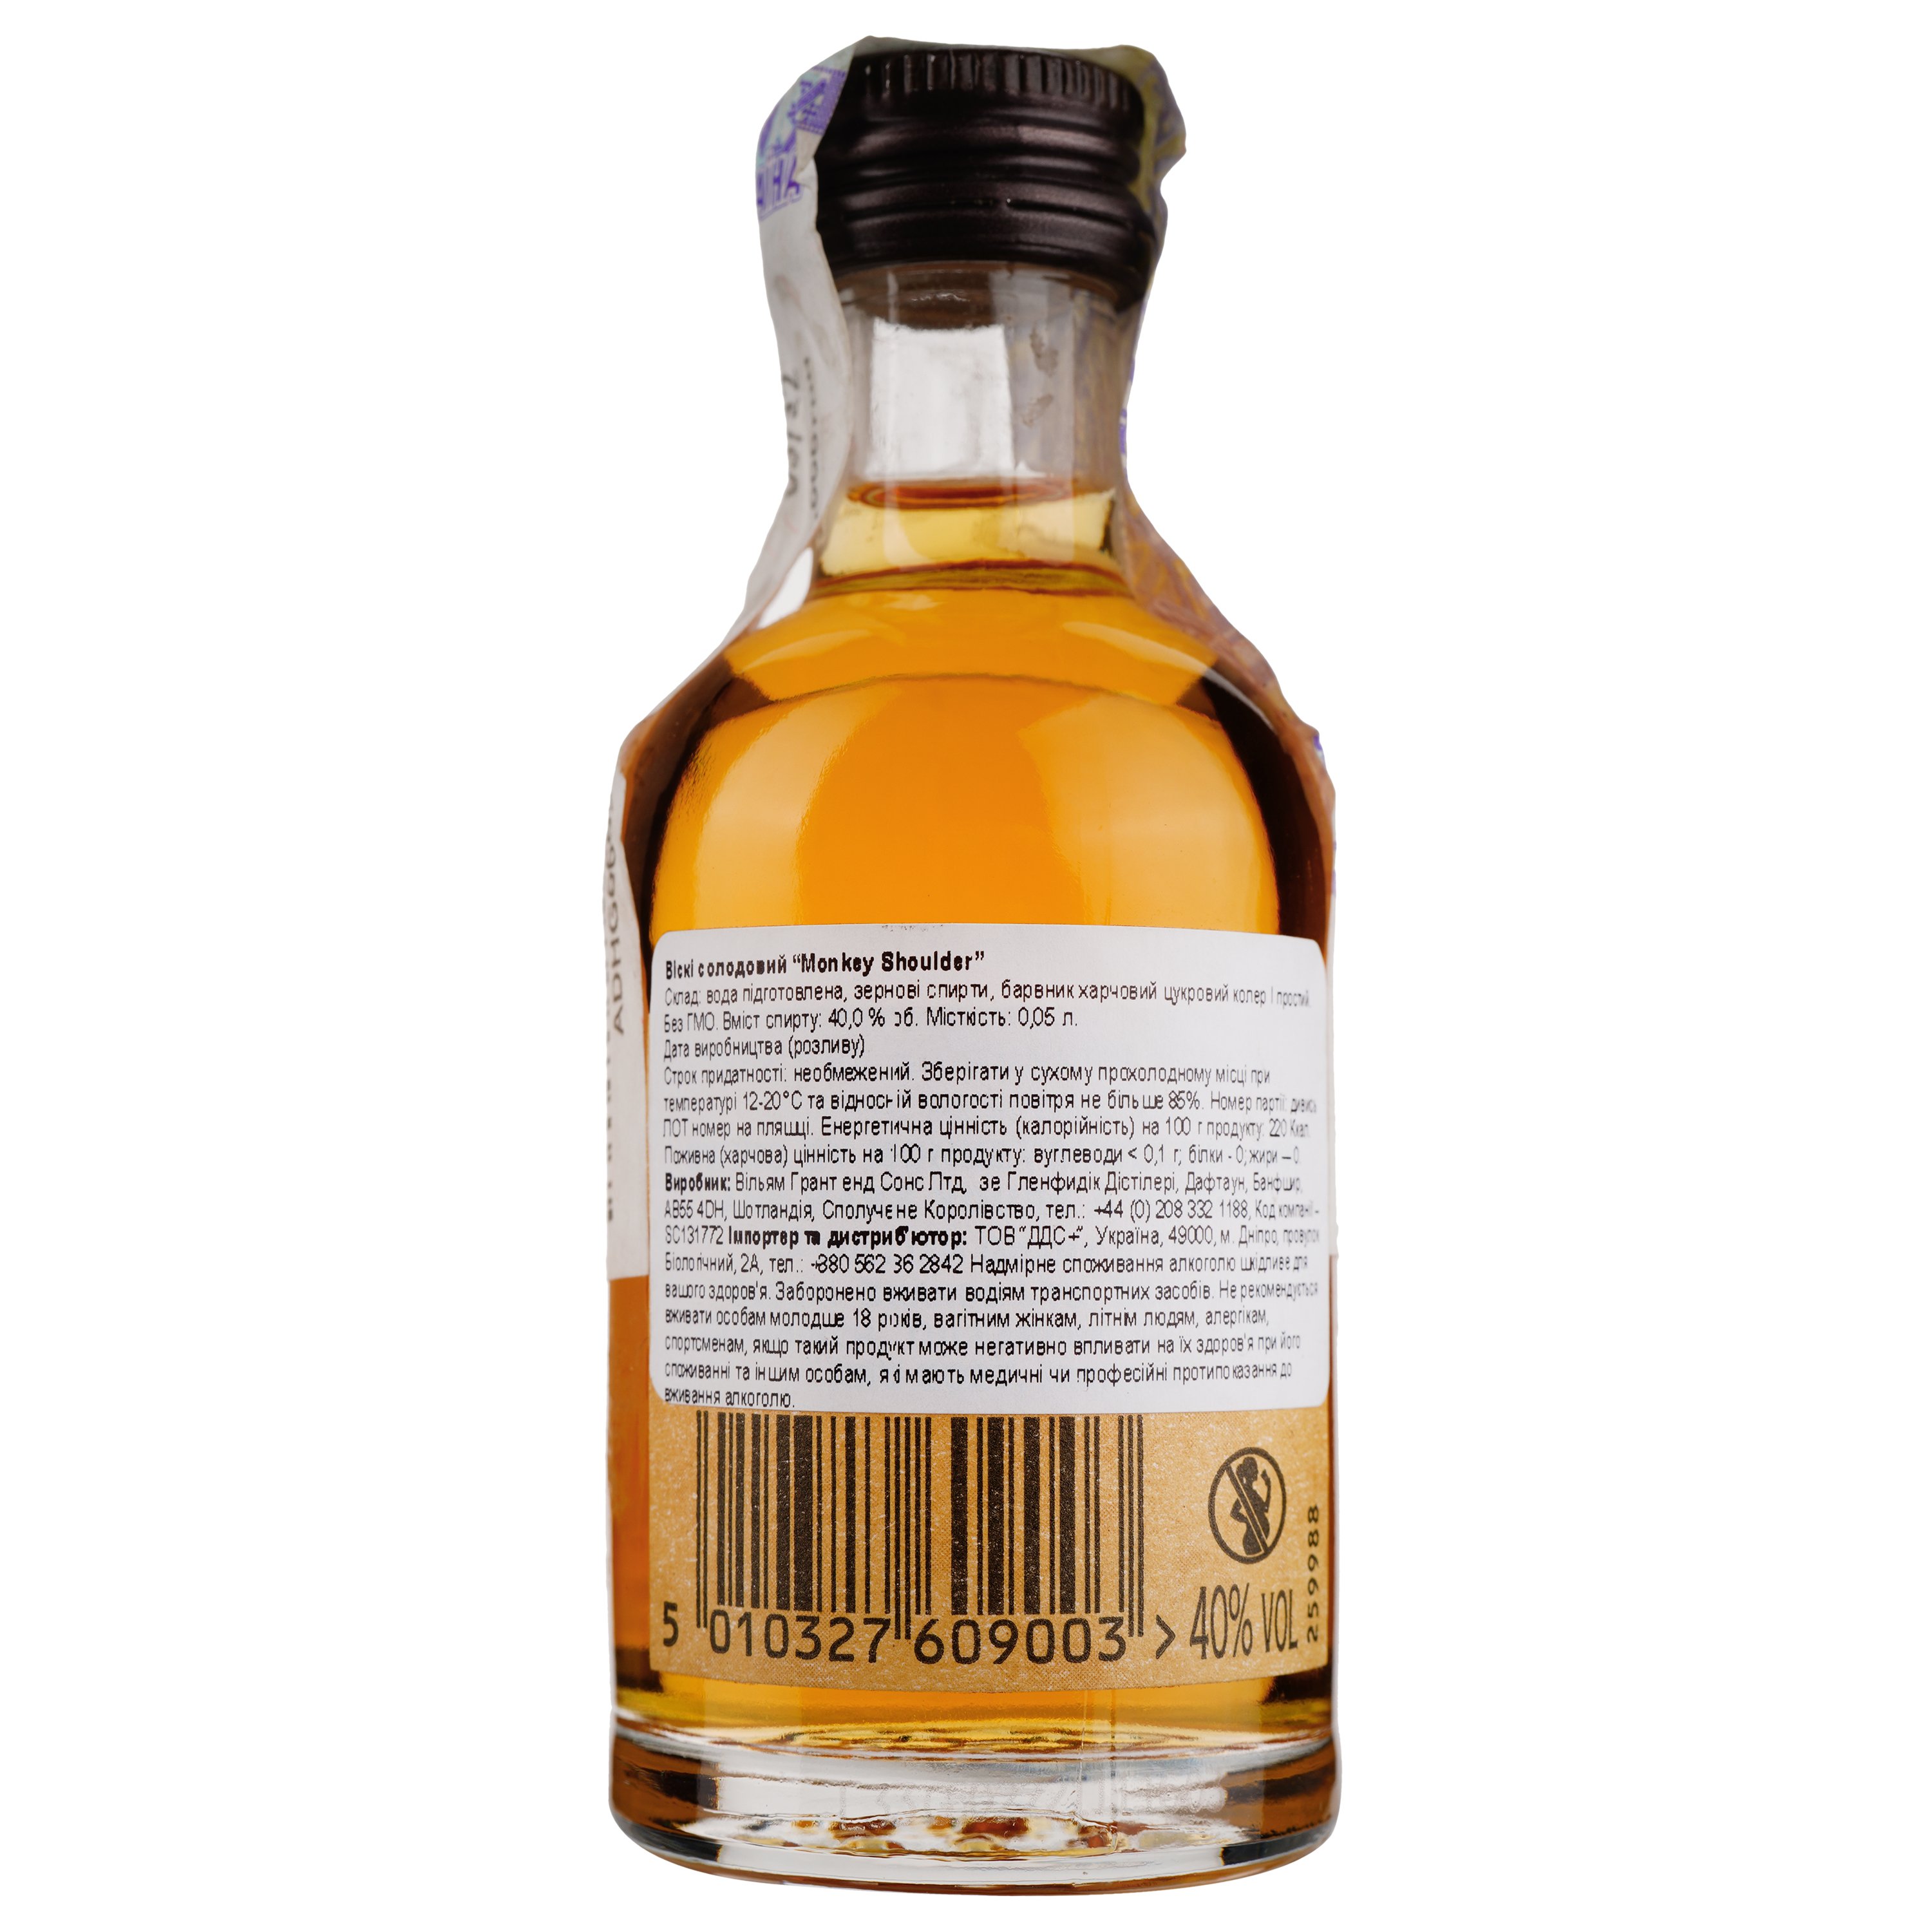 Віски Monkey Shoulder Blended Malt Scotch Whisky, 40%, 0,05 л - фото 2